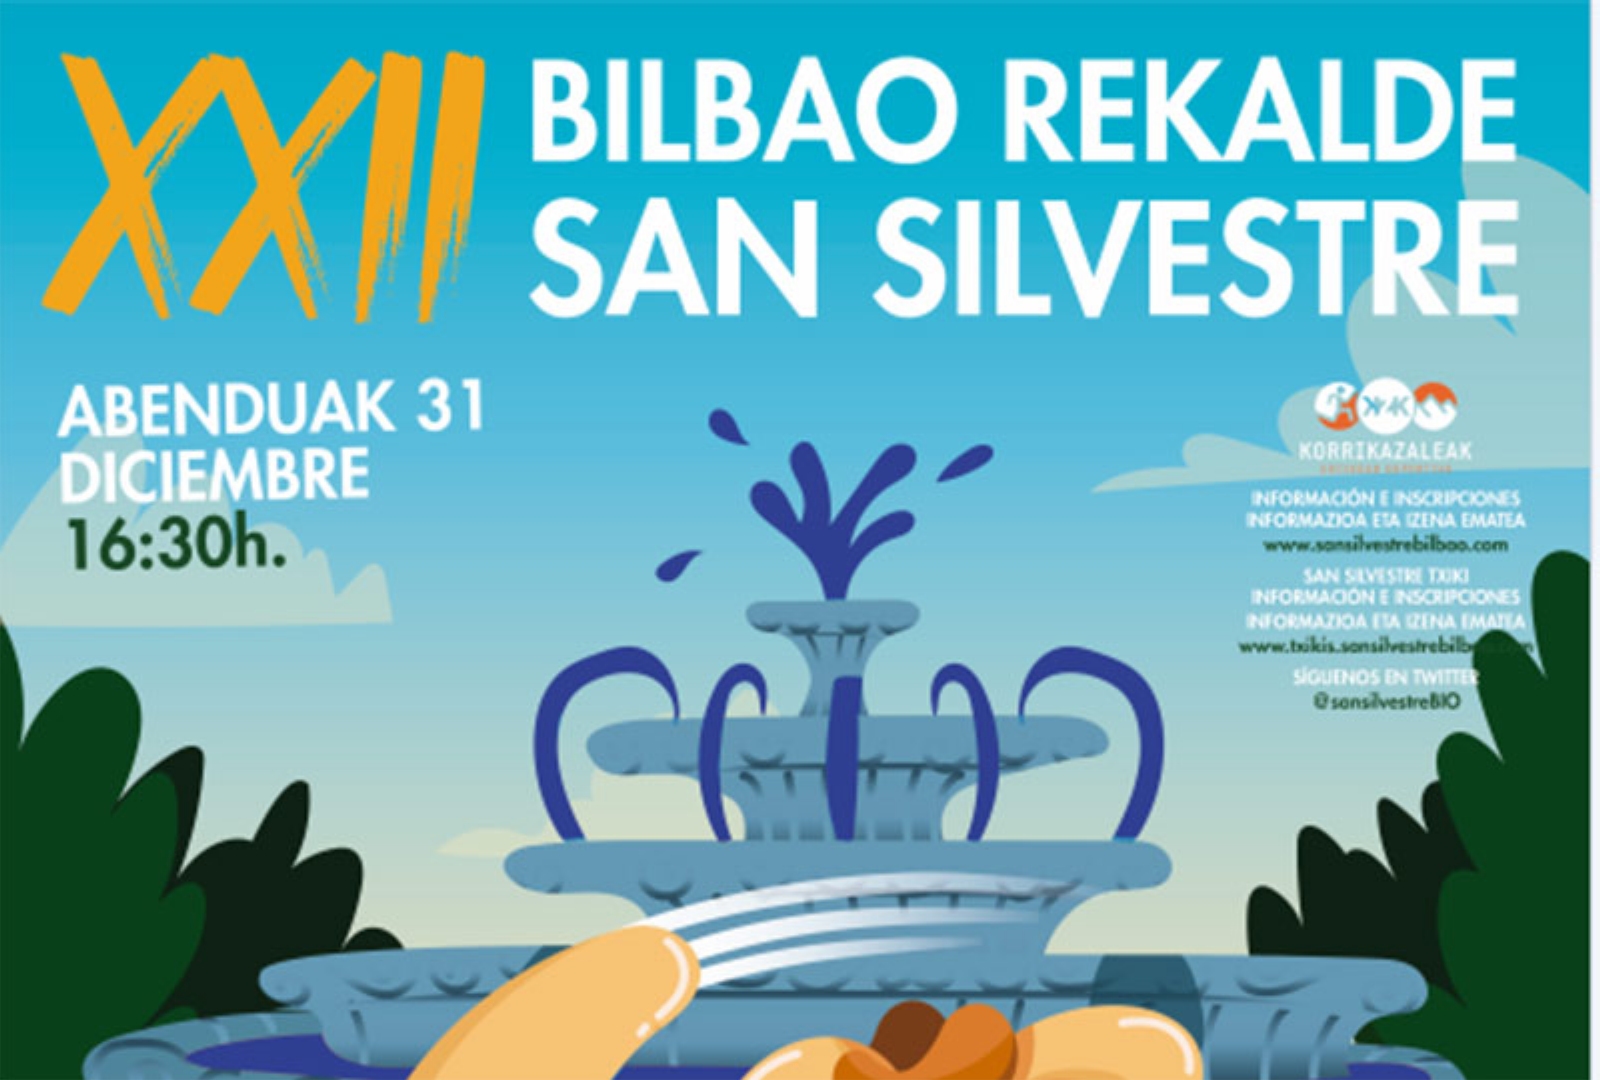 La XII Bilbao Rekalde San Silvestre 2023